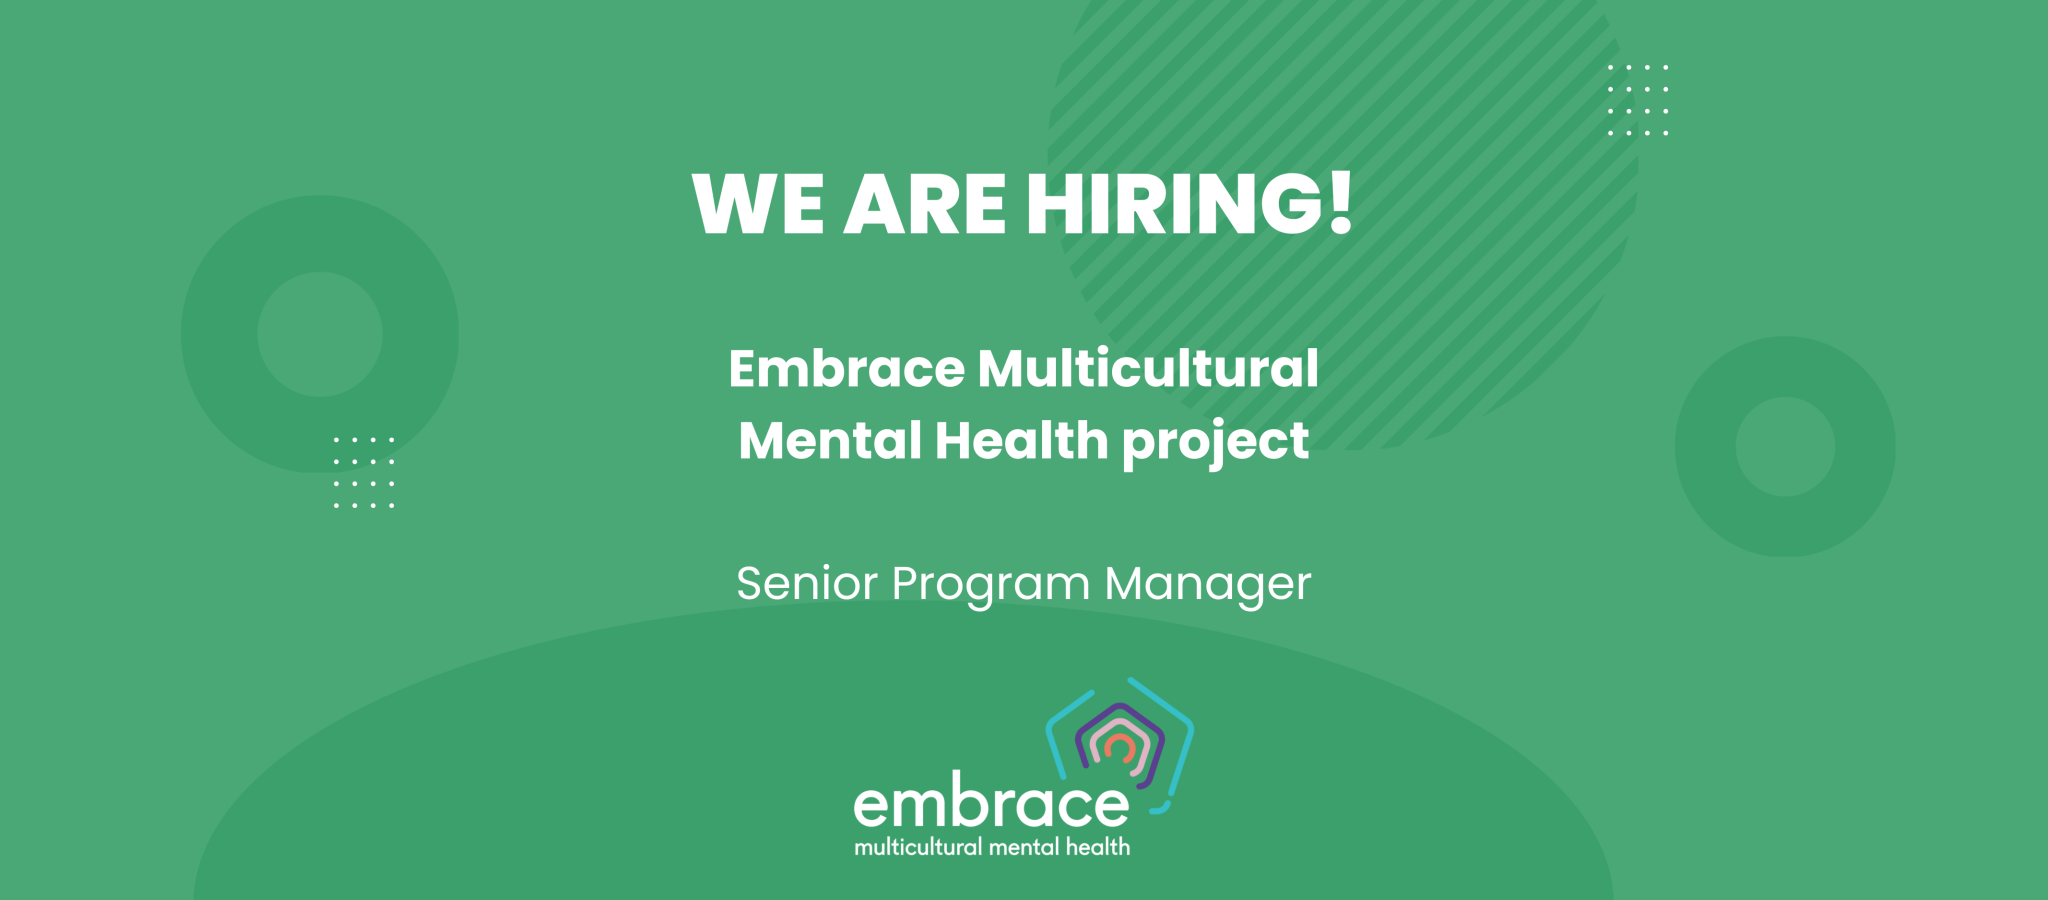 Job Vacancy: Embrace Multicultural Mental Health project, Senior Program Manager